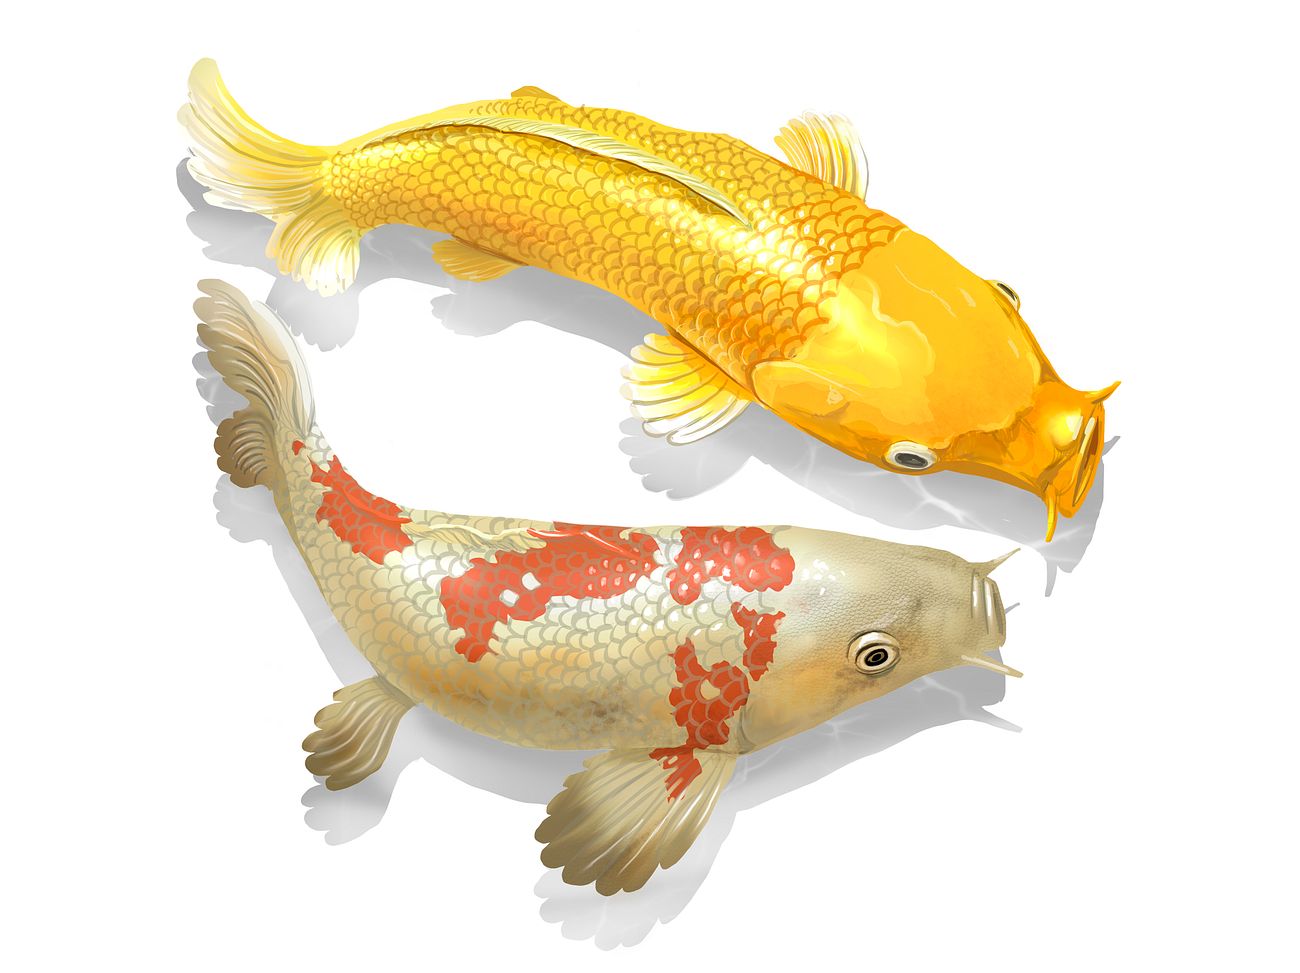 Two Japanese Koi fish swimming | Premium PSD - rawpixel